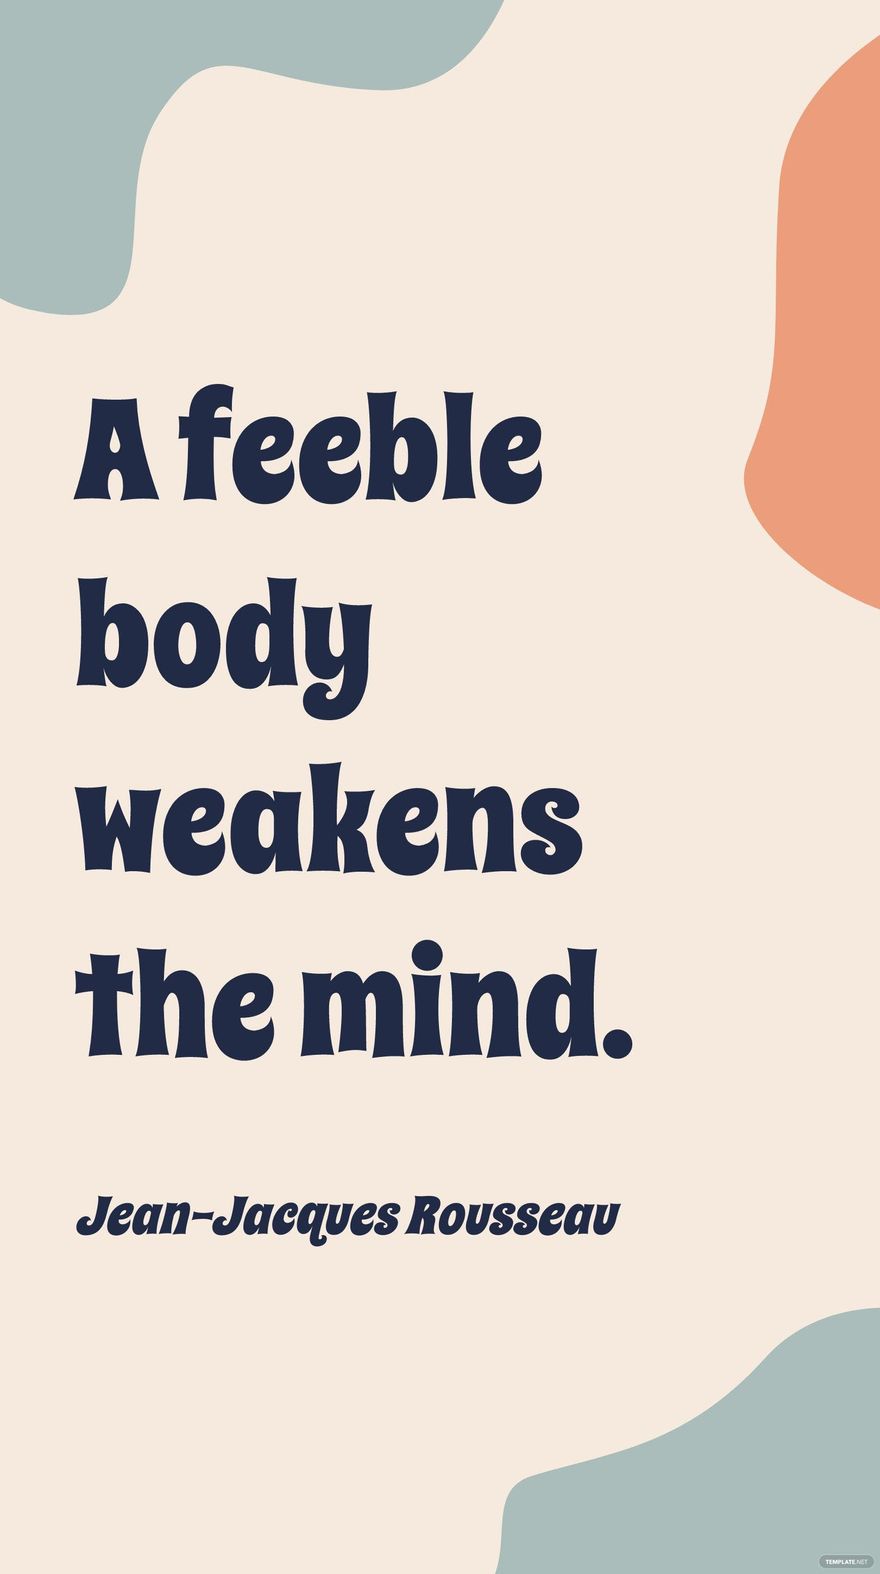 Jean-Jacques Rousseau - A feeble body weakens the mind.